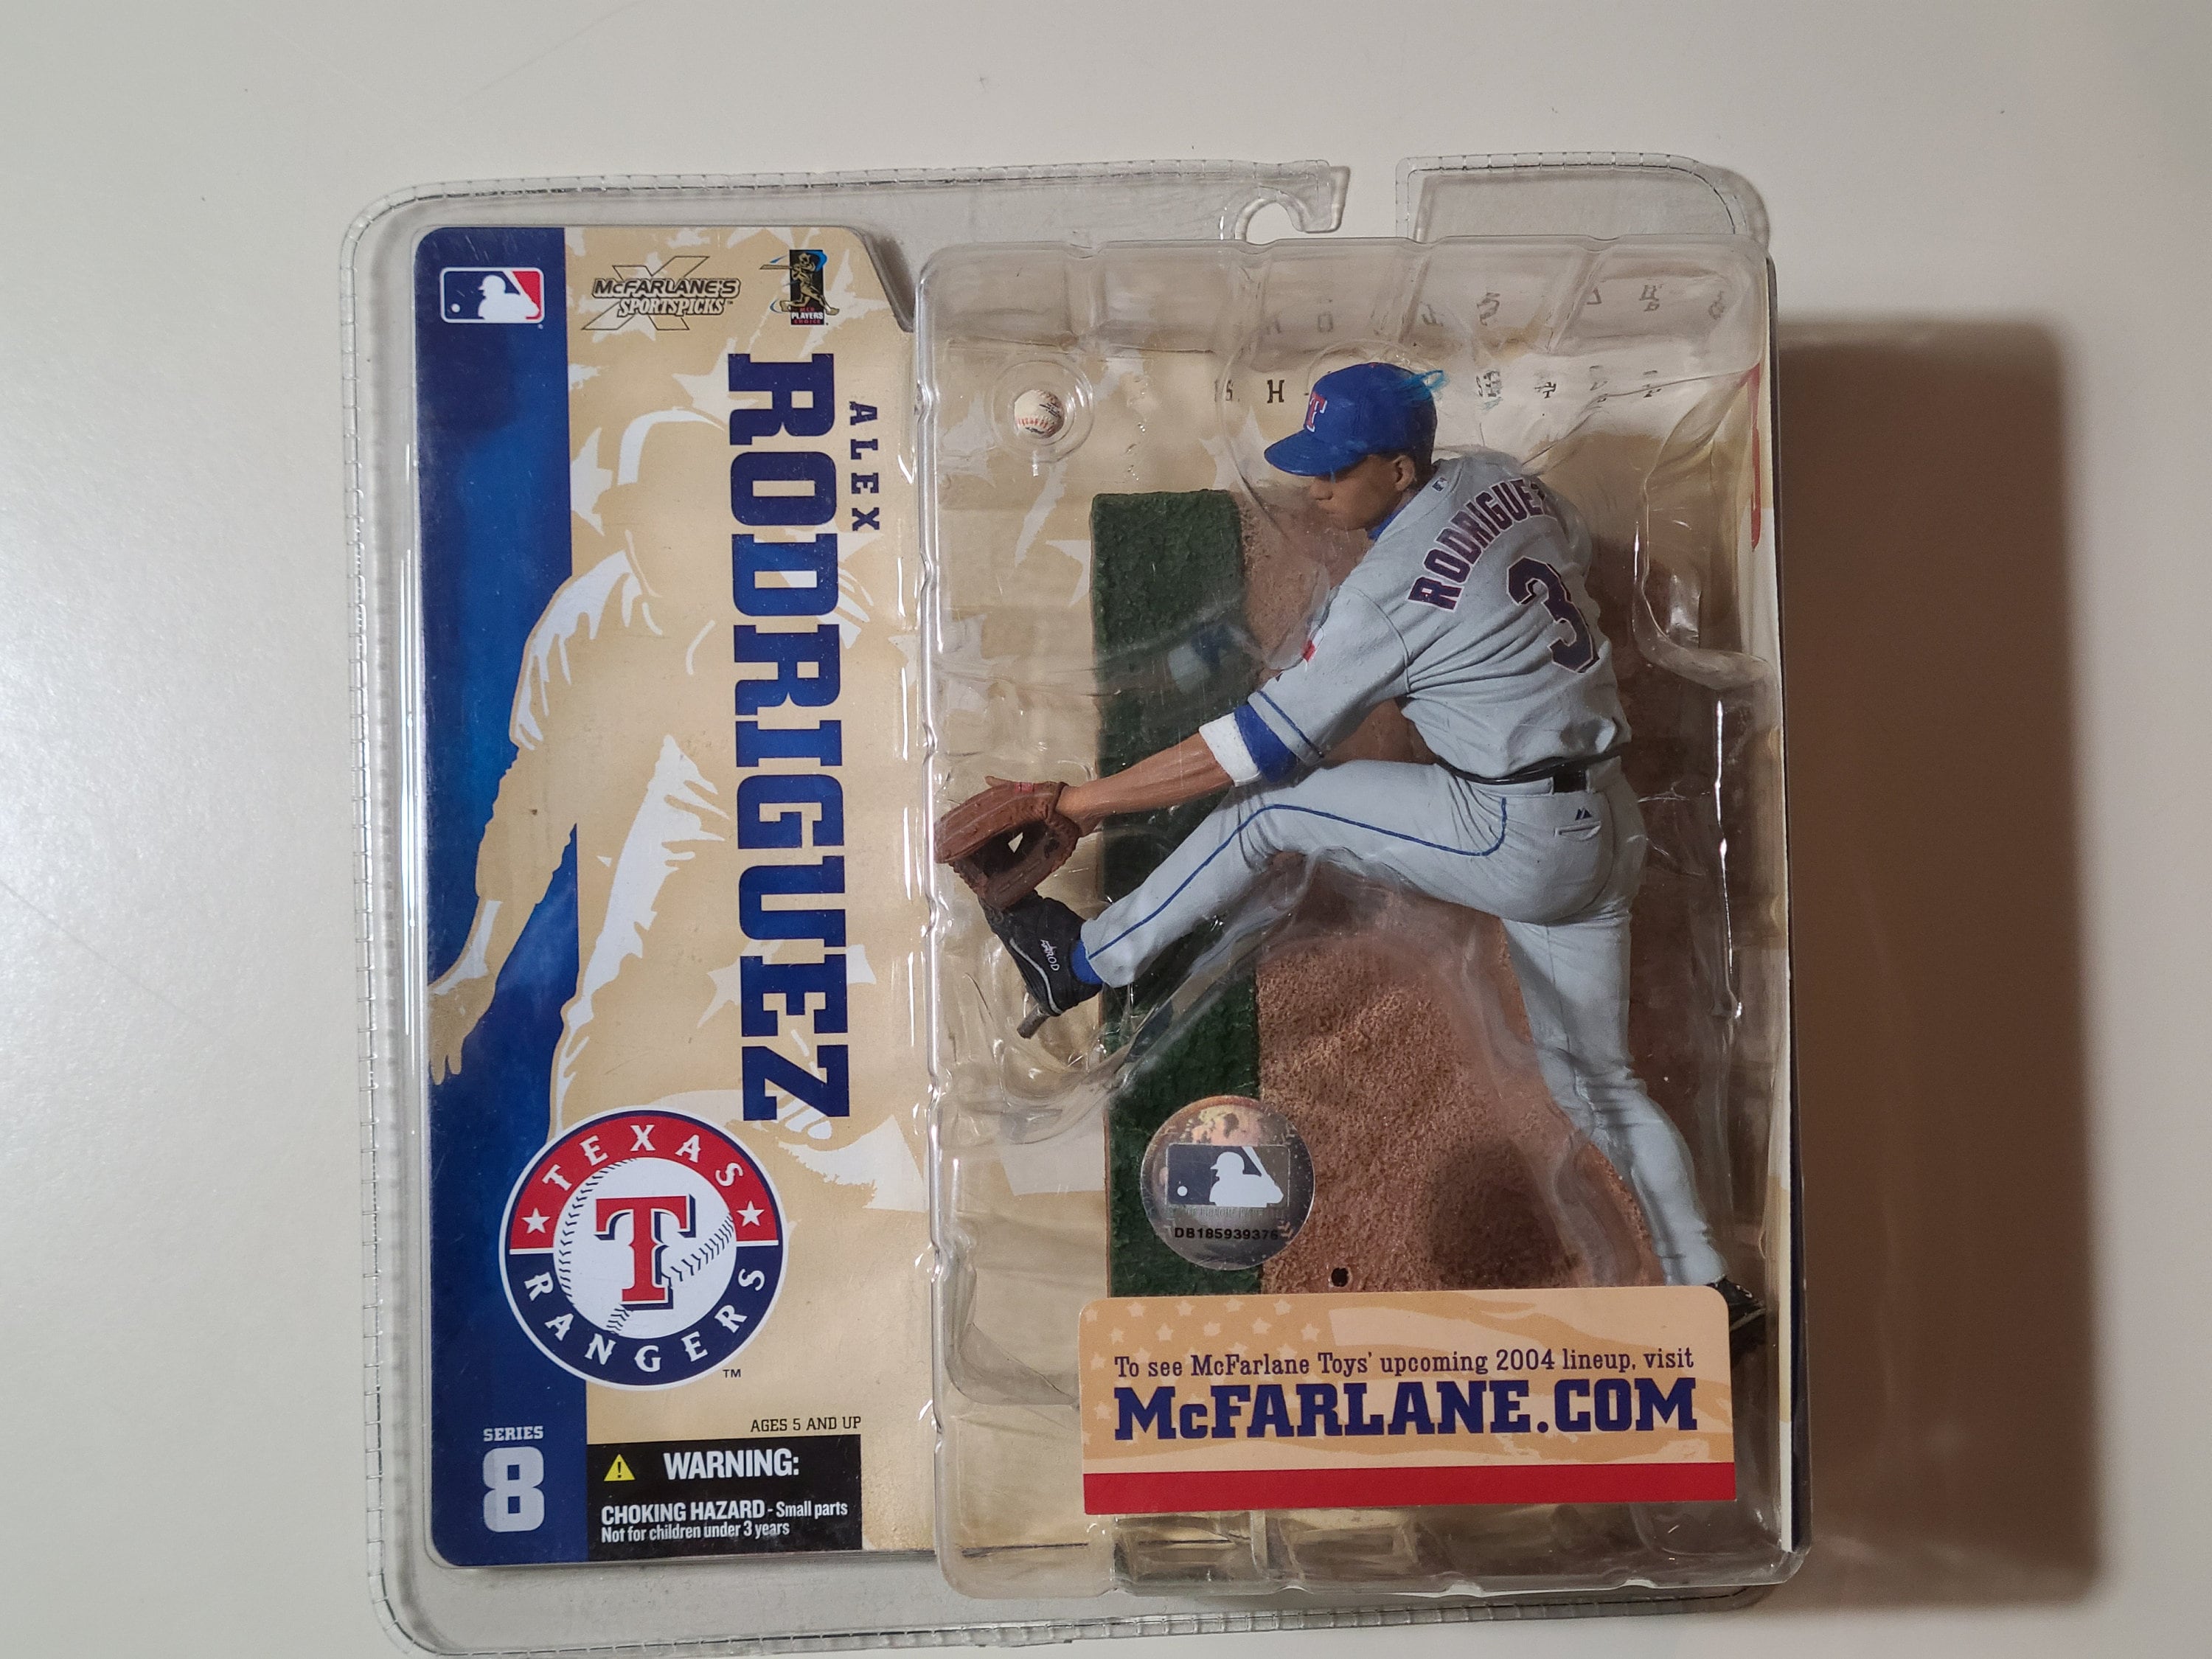 McFarlane Toys MLB Texas Rangers Sports Picks Baseball Series 2